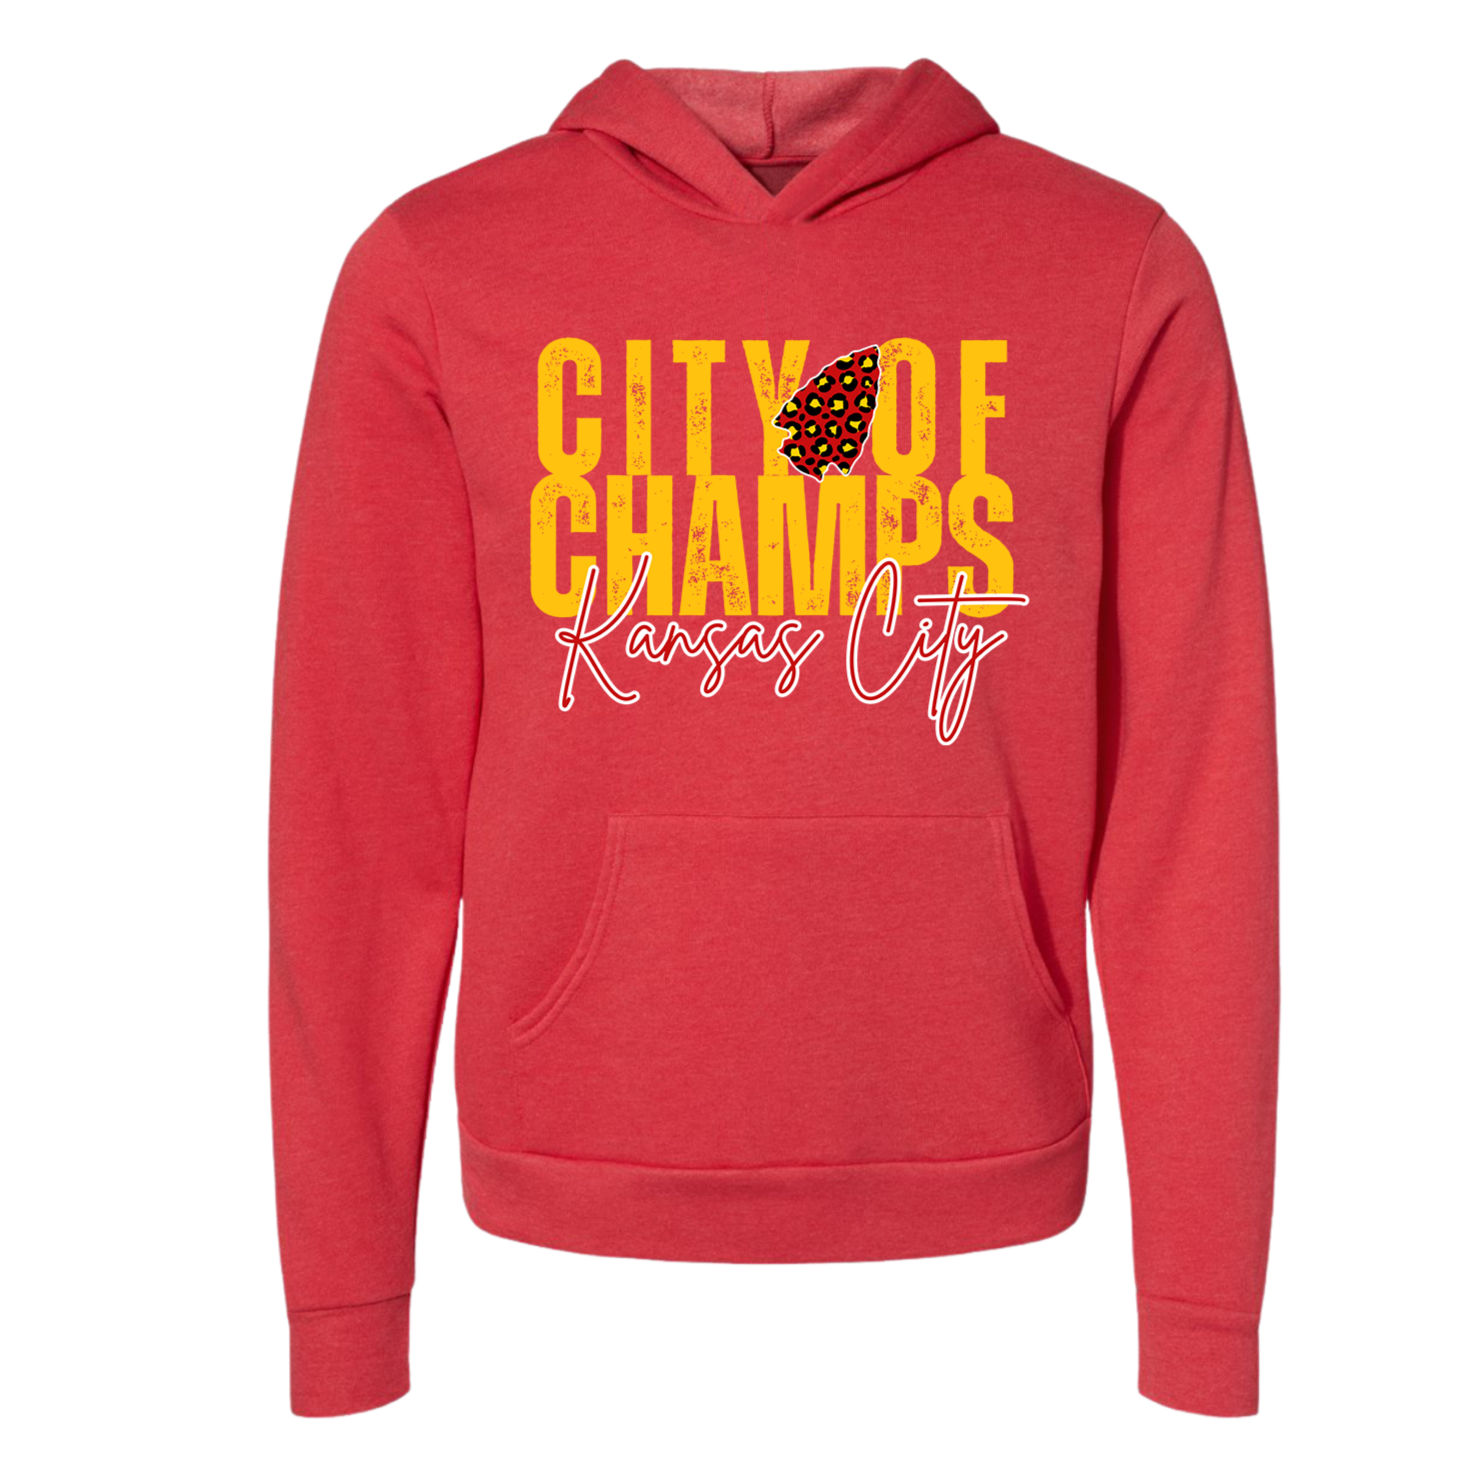 City of Champs Kansas City Tee OR Sweatshirt